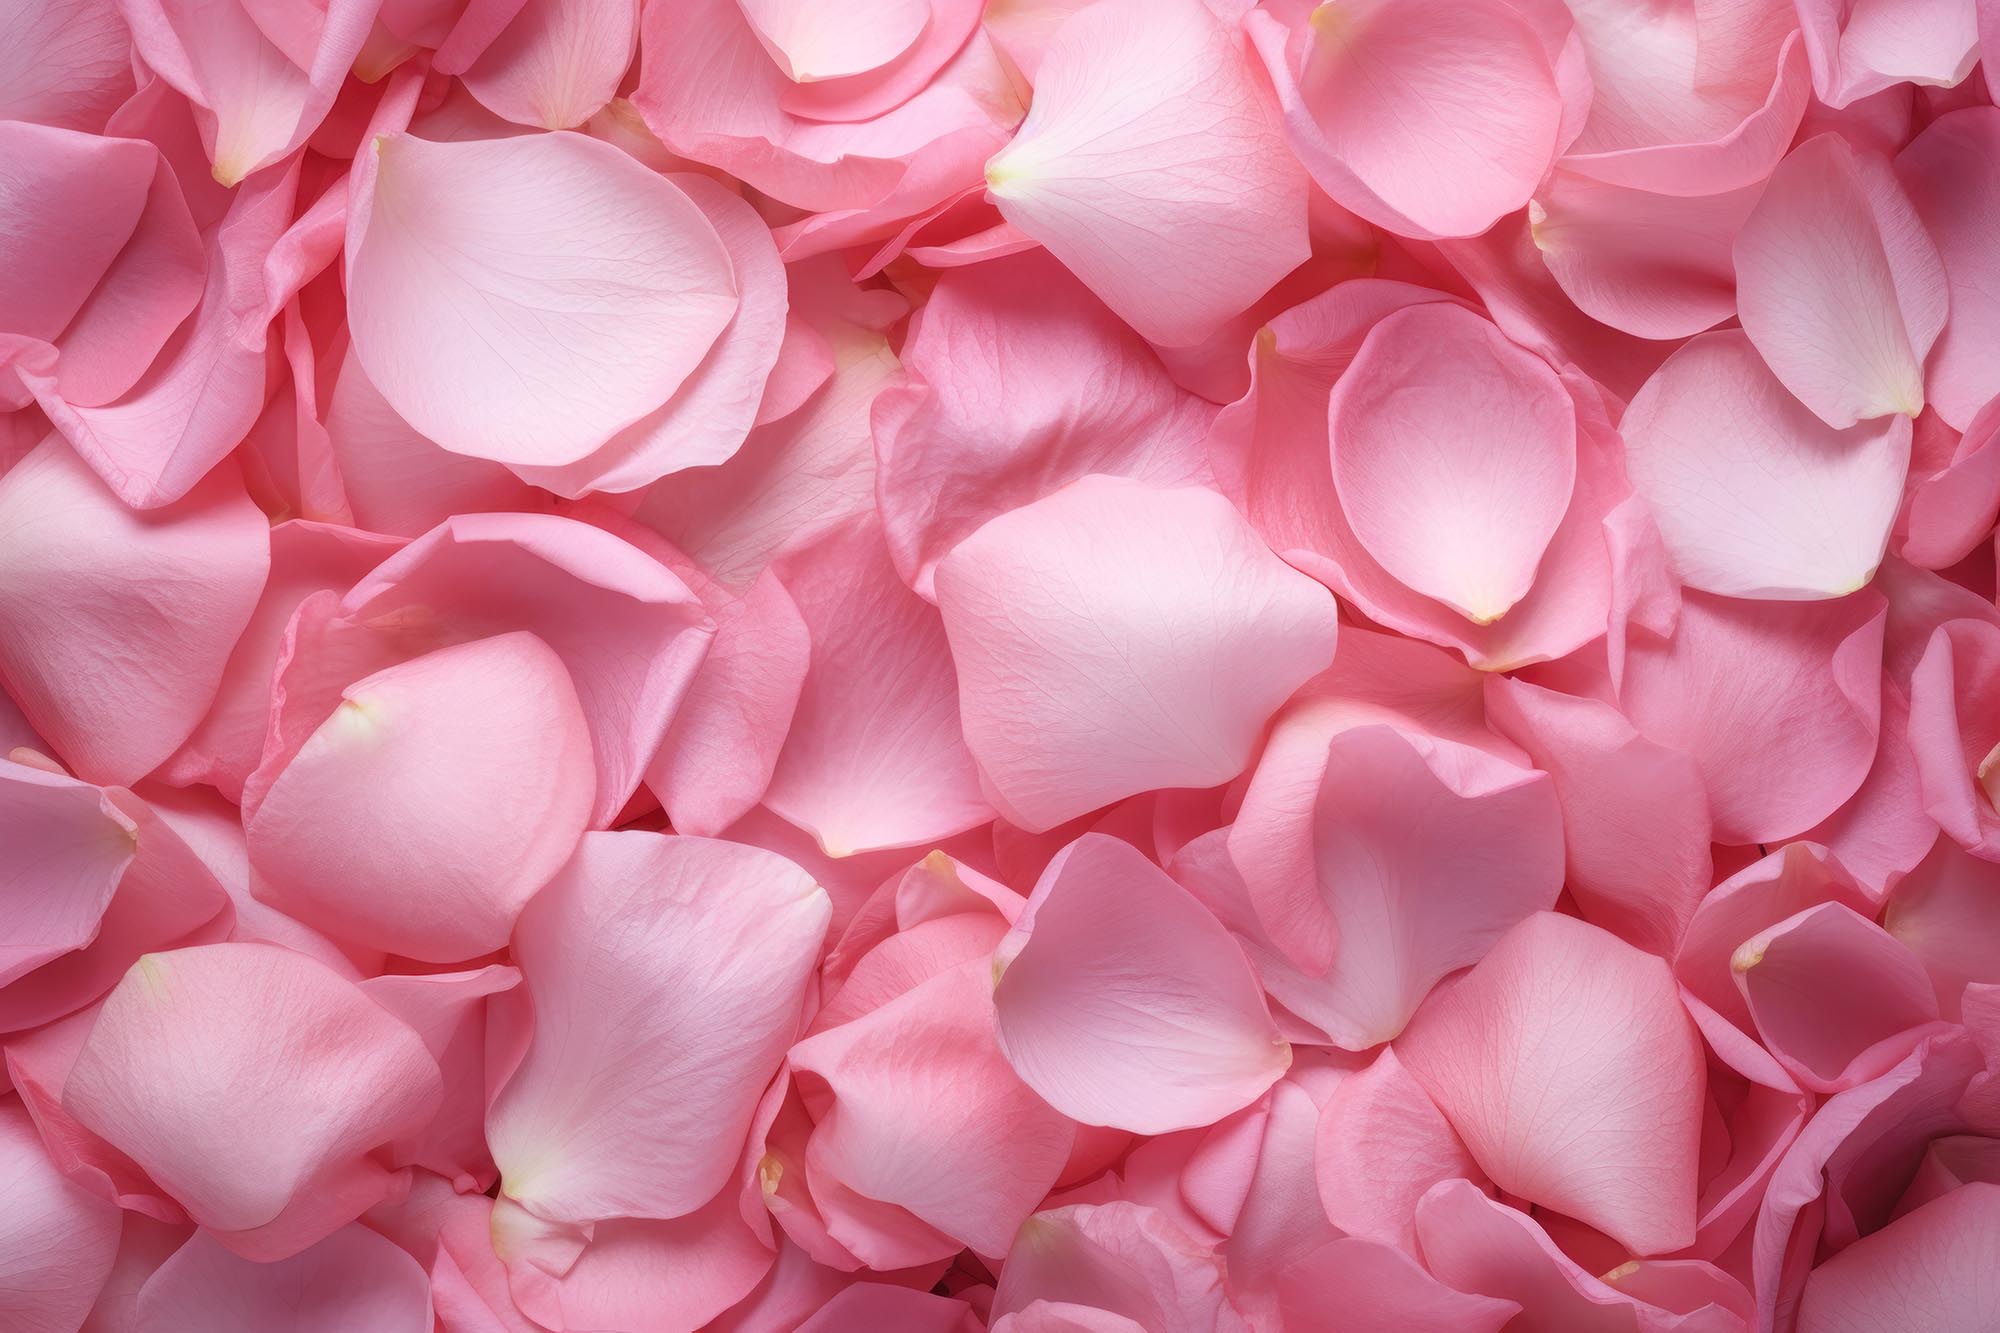 An allover texture of pink rose petals